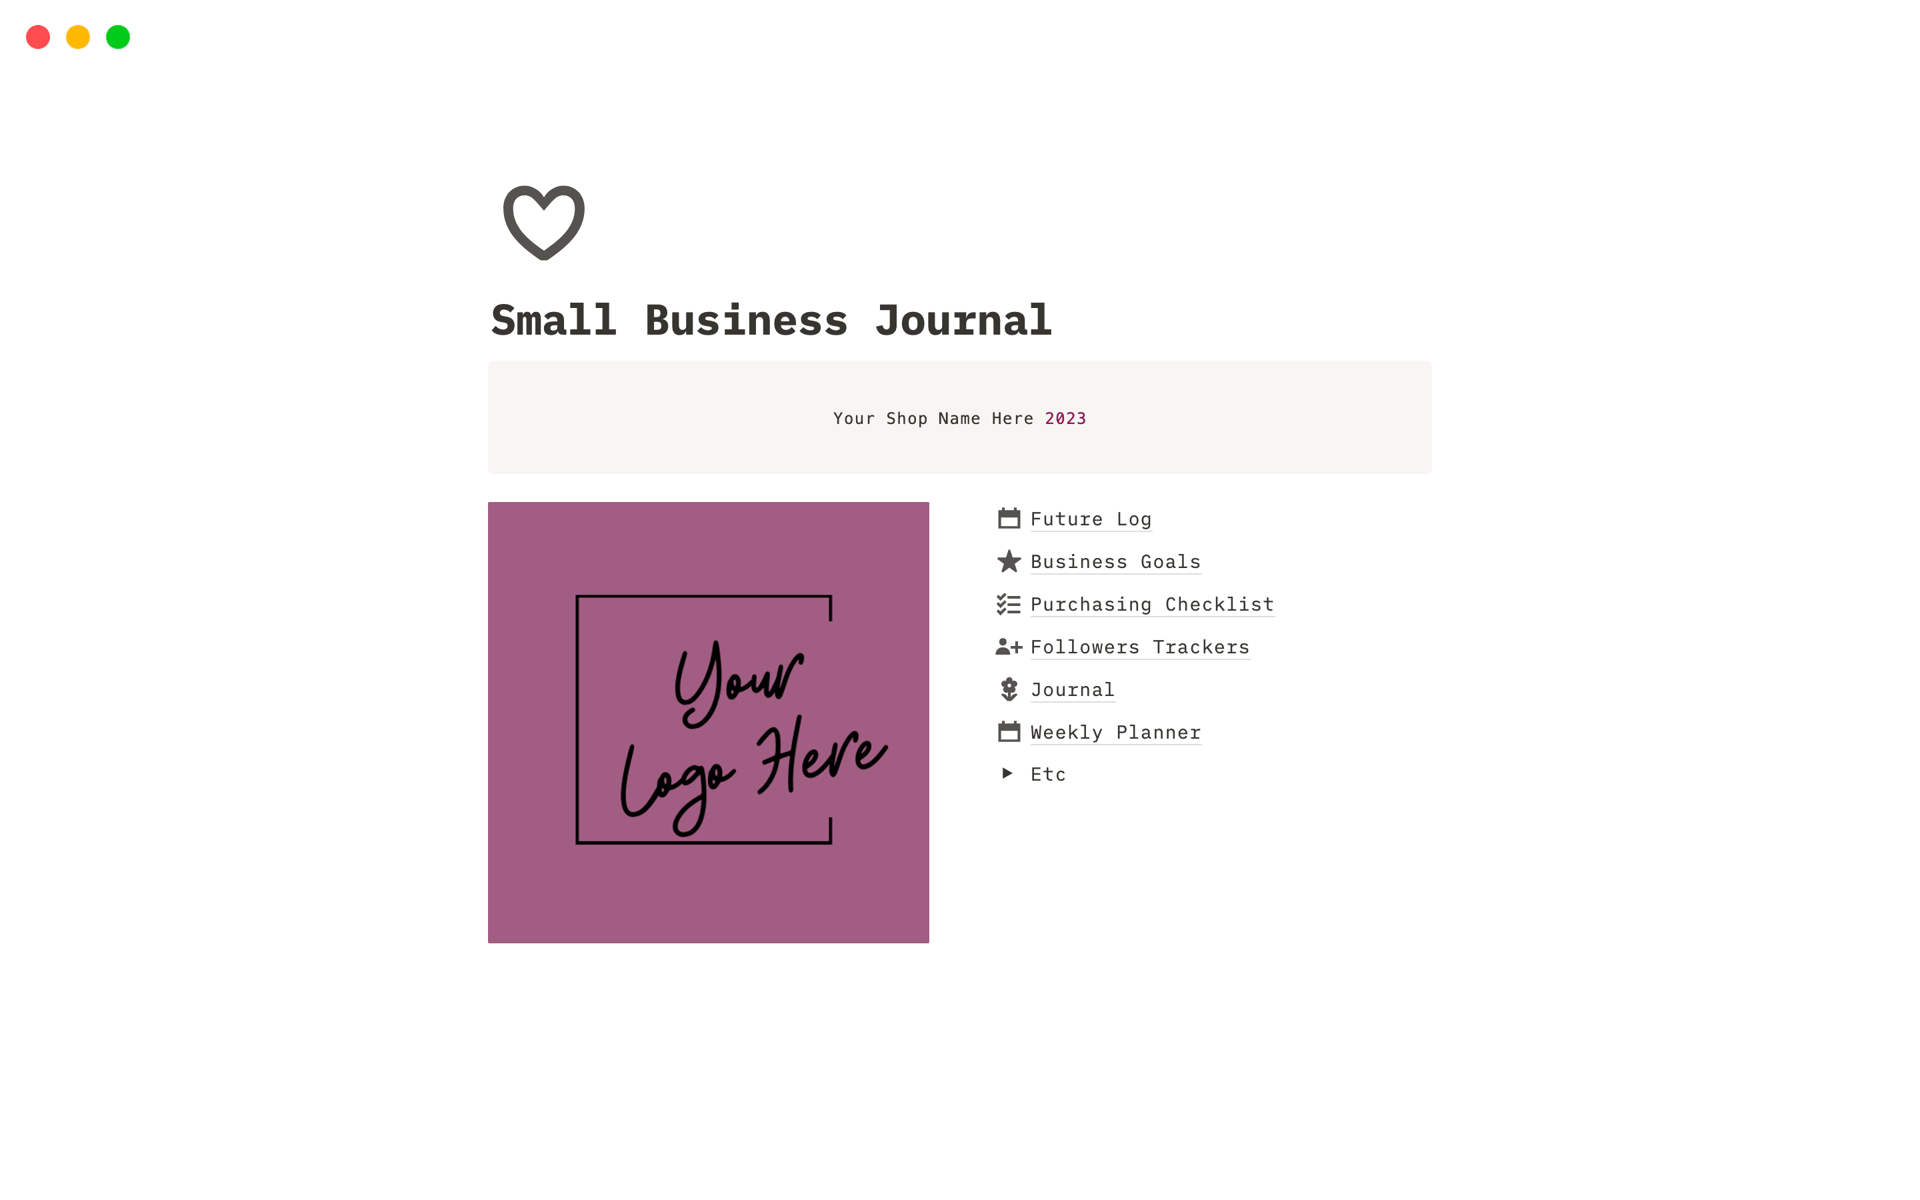 Vista previa de plantilla para Small Business Journal